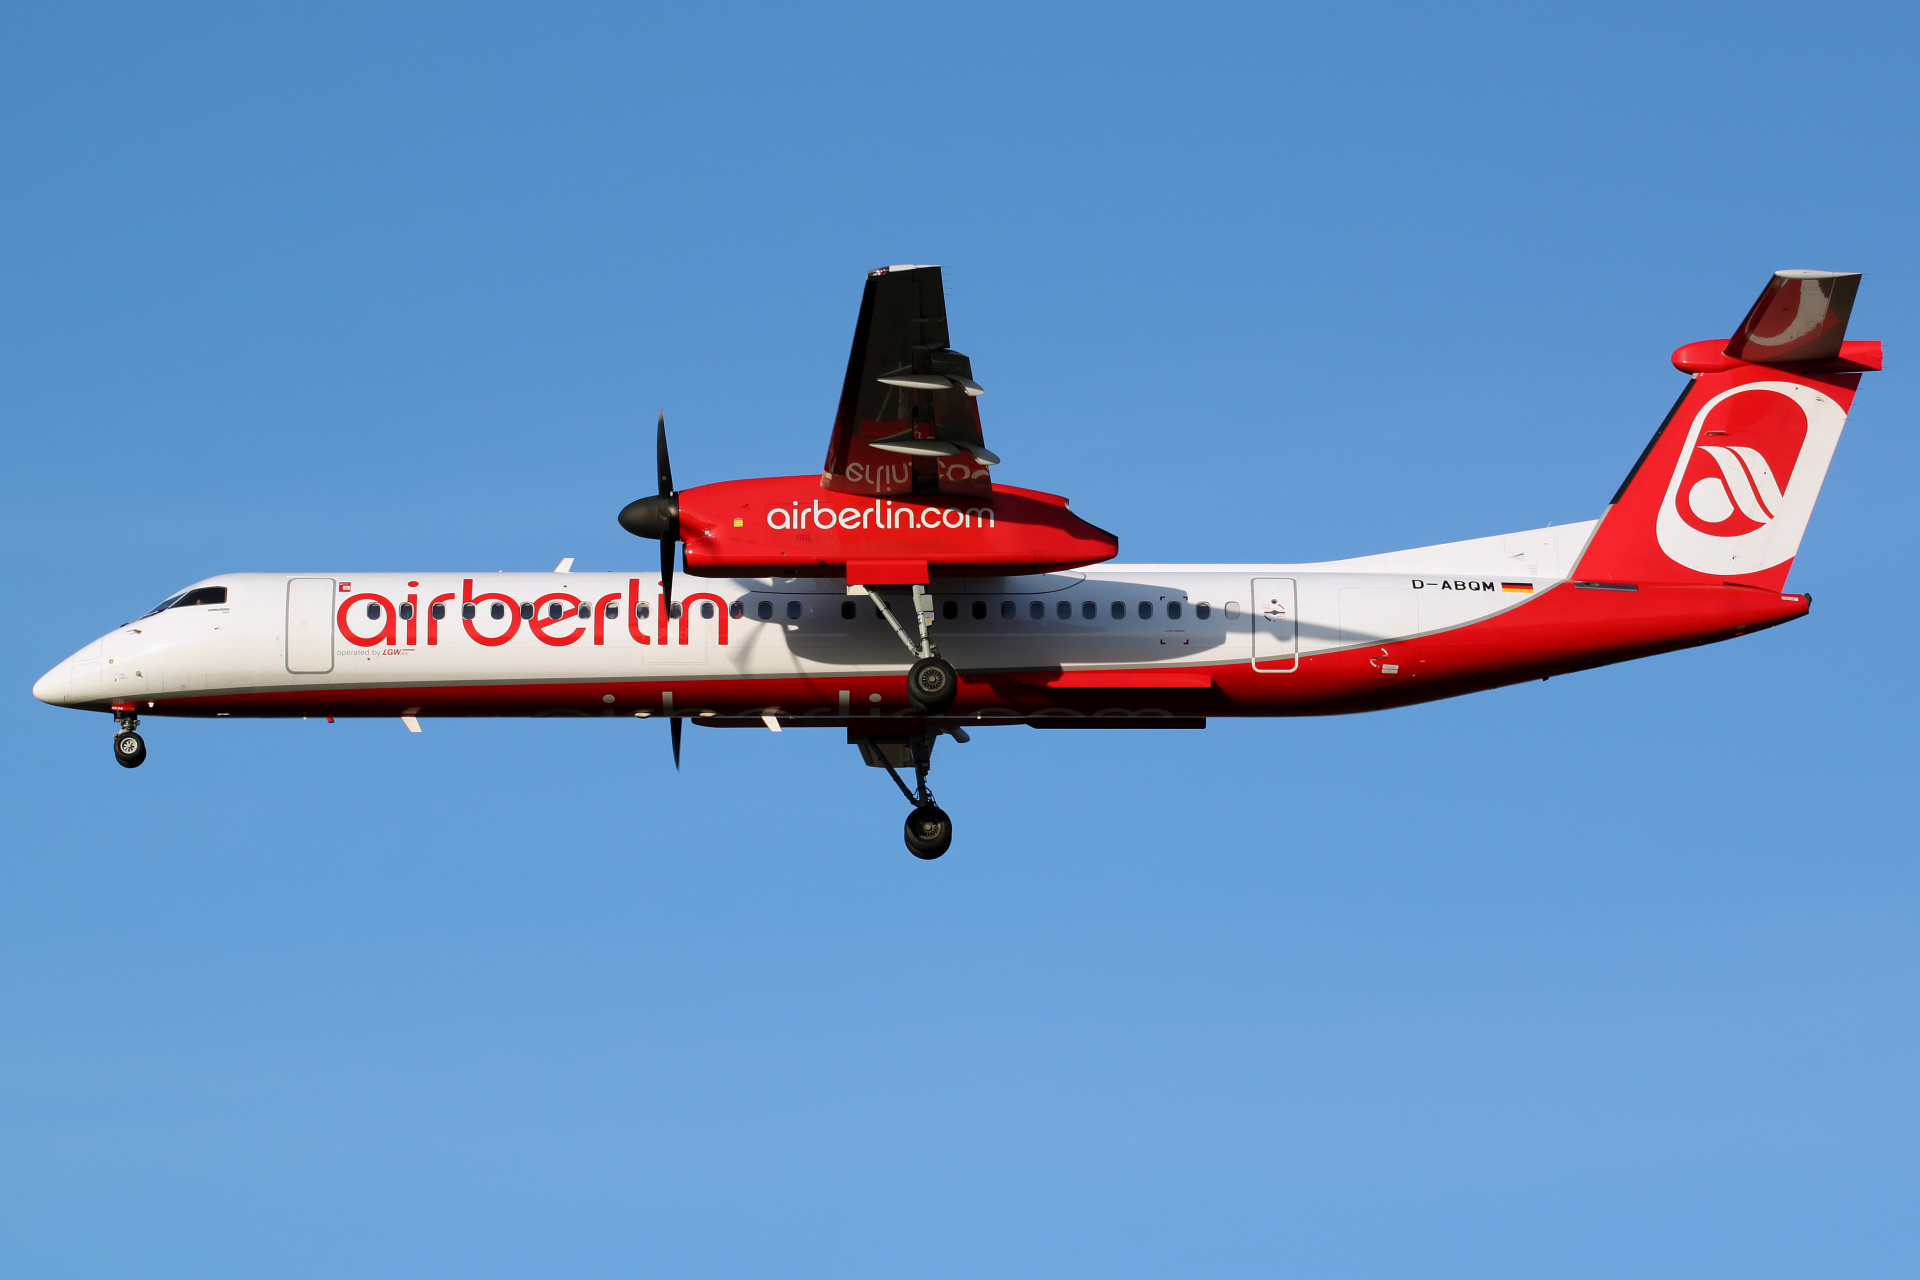 D-ABQM, AirBerlin (Aircraft » EPWA Spotting » De Havilland Canada DHC-8 Dash 8 » AirBerlin)